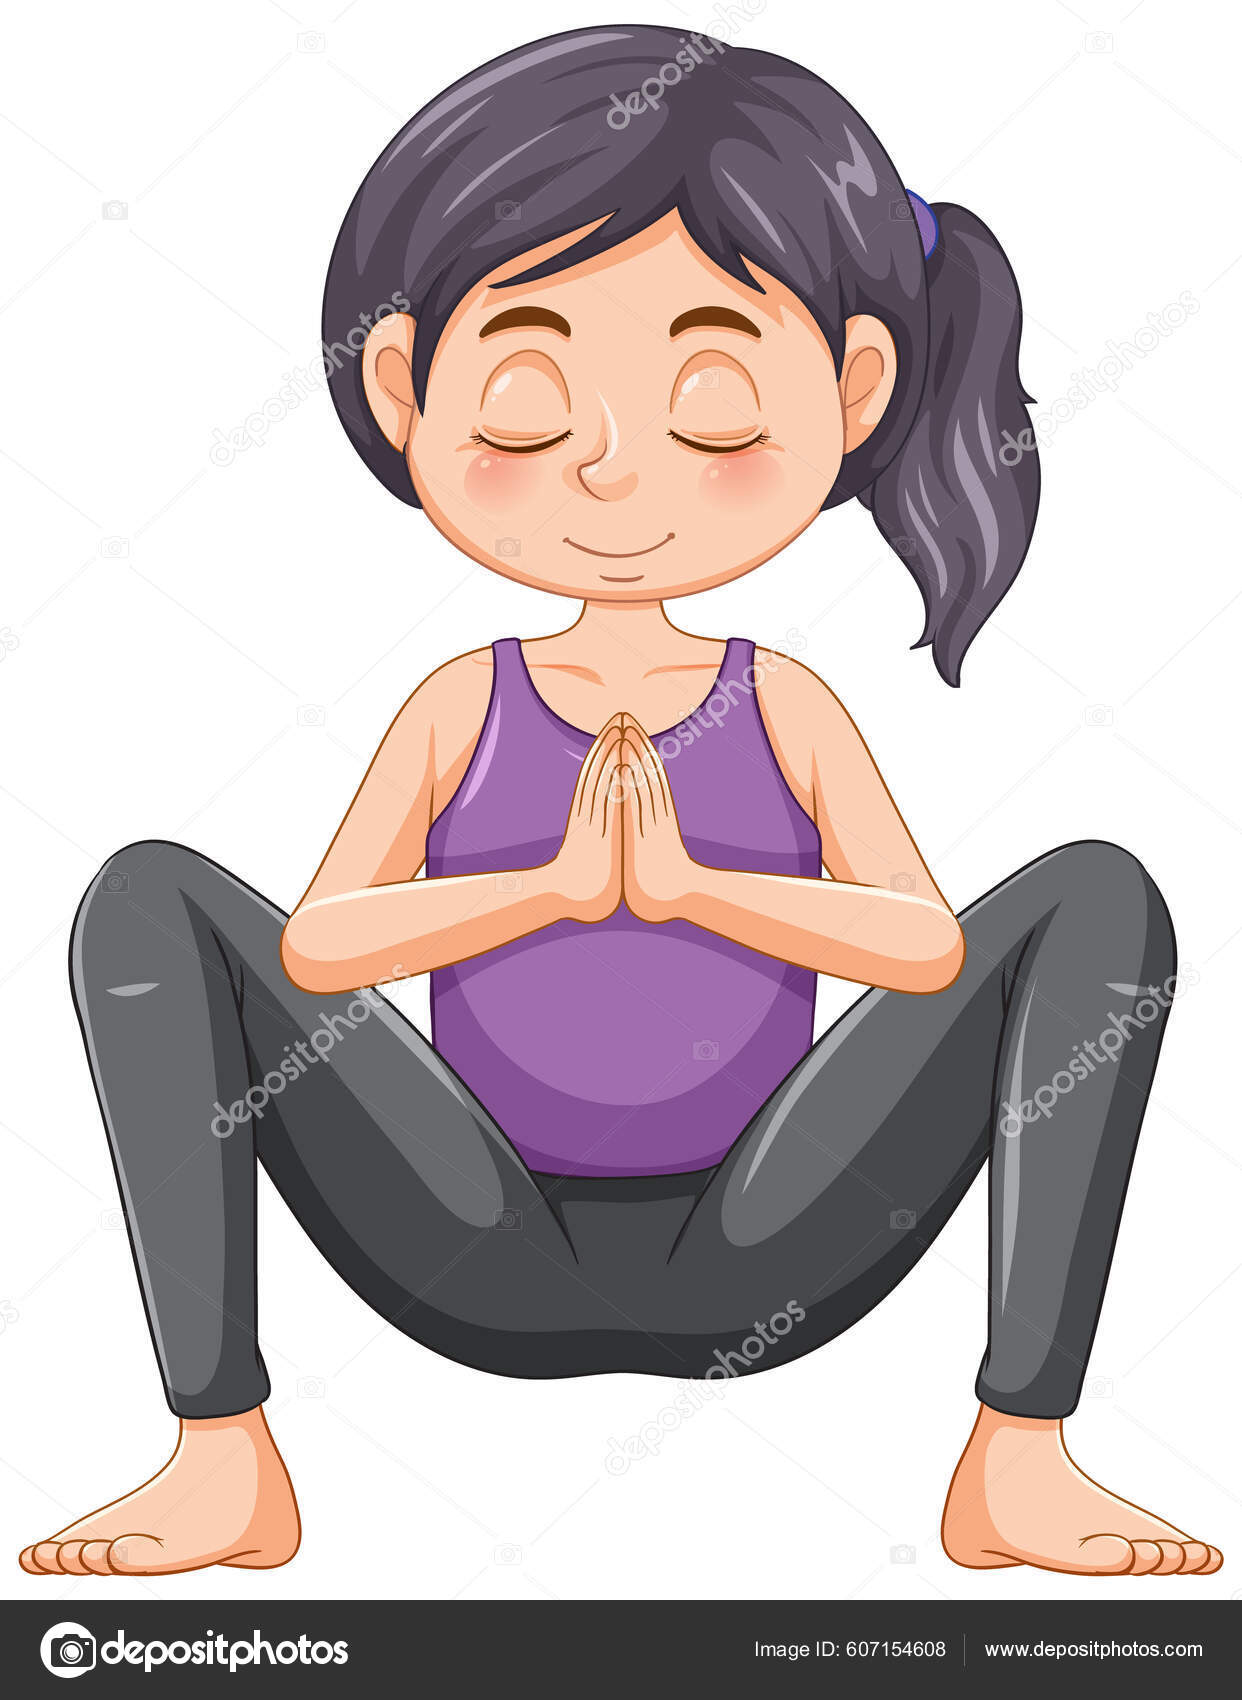 https://st.depositphotos.com/1526816/60715/v/1600/depositphotos_607154608-stock-illustration-yoga-squat-pose-cartoon-character.jpg